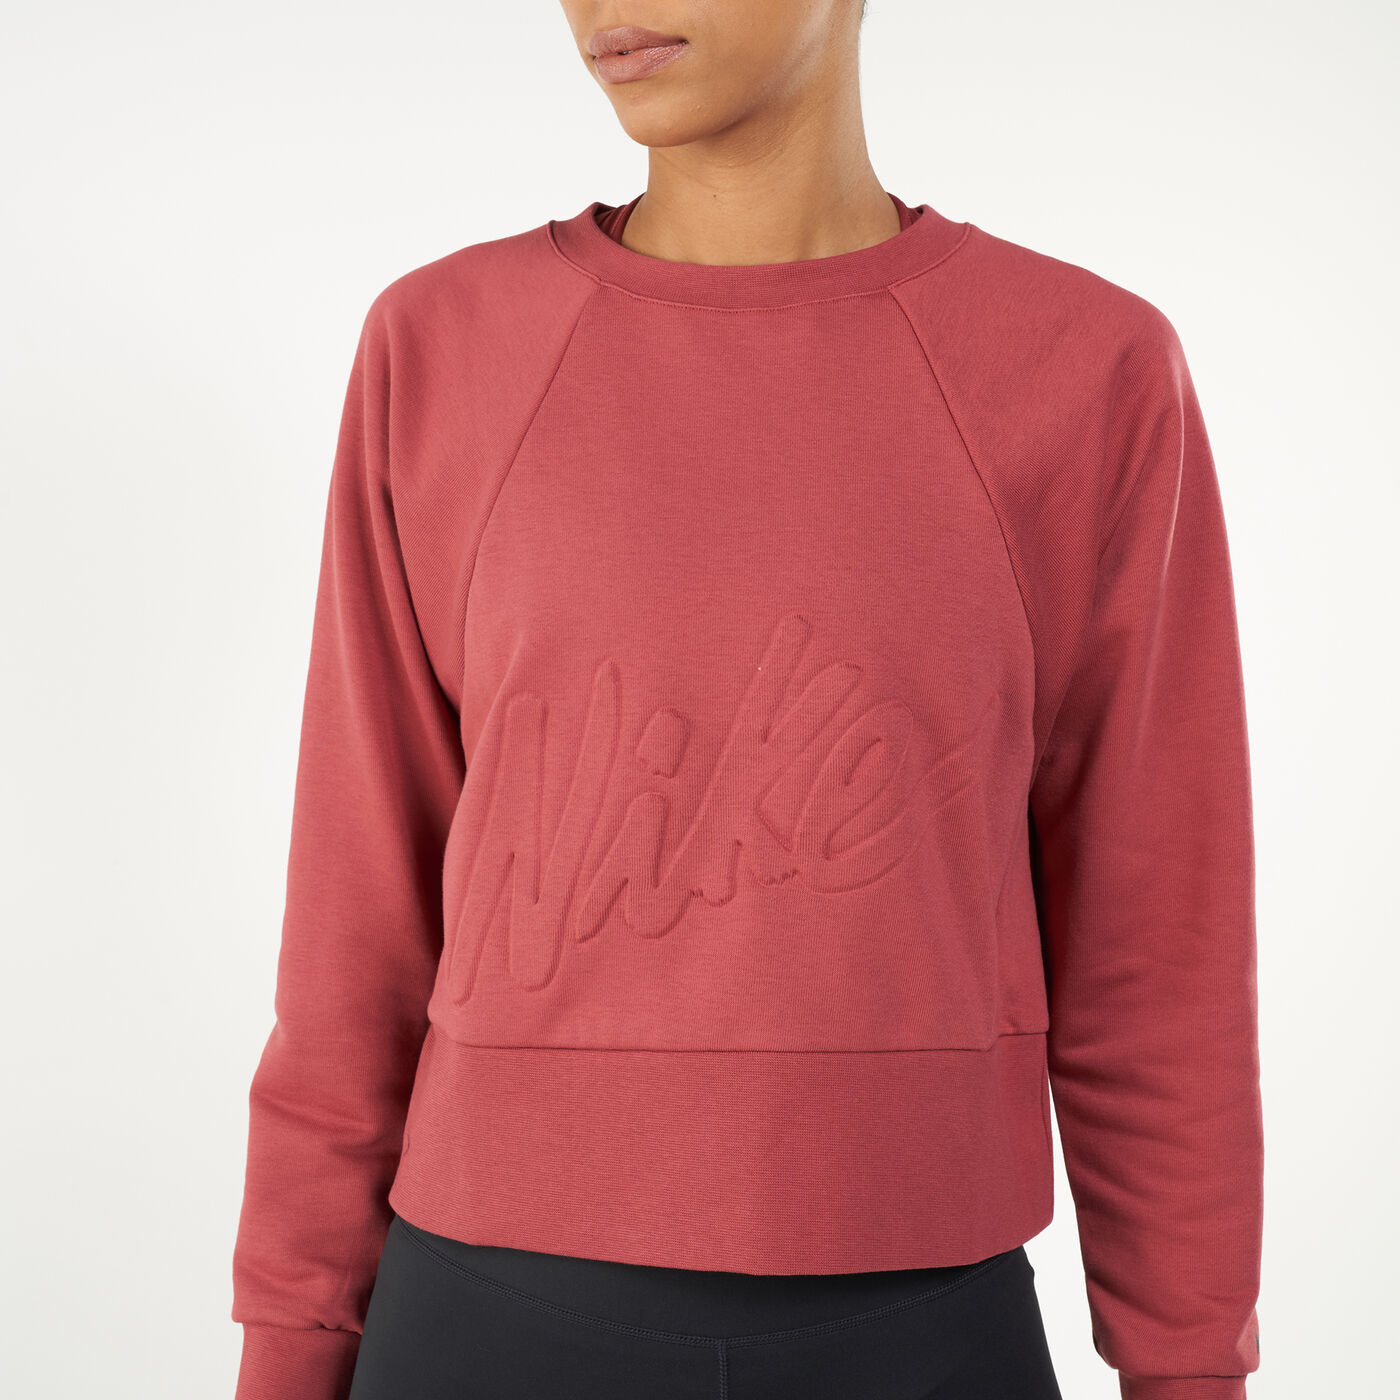 Women's Dri-FIT Get Fit Fleece Sweatshirt